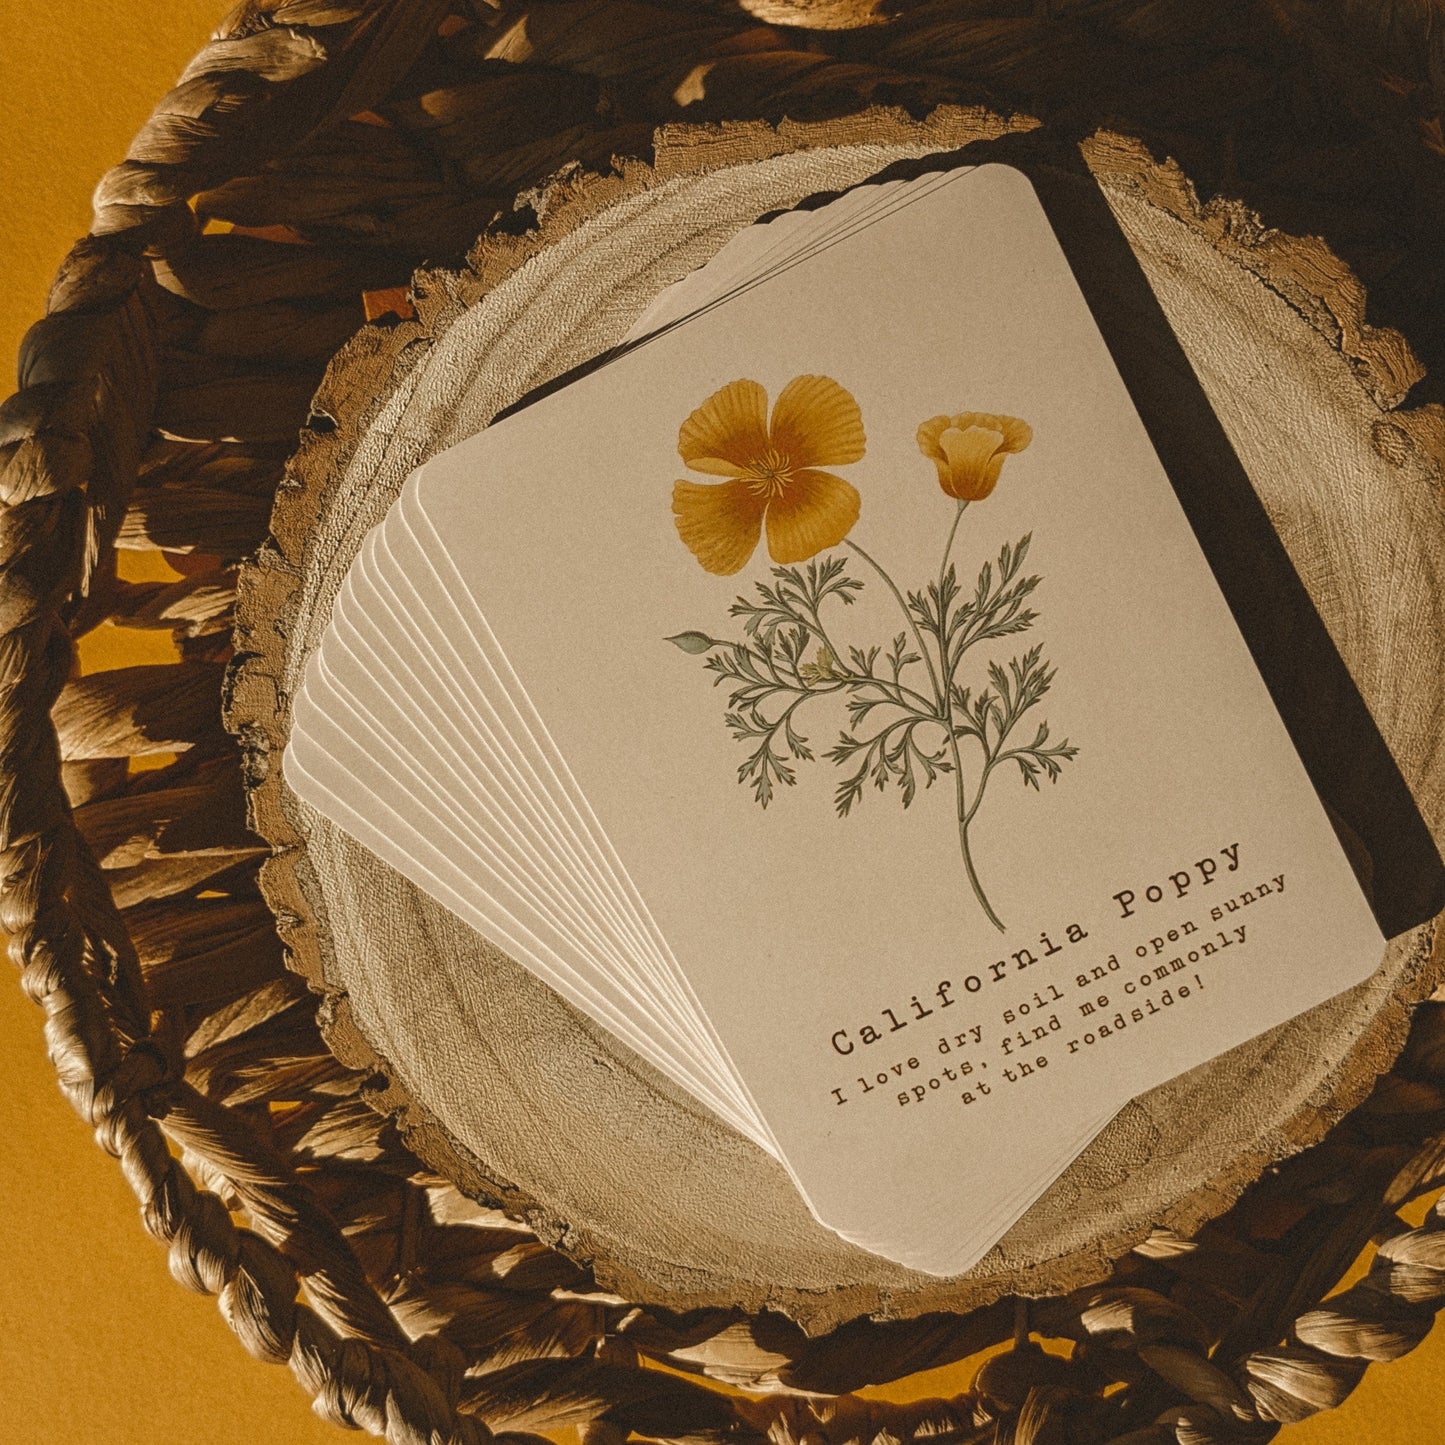 Wildflower Identifier A6 Card Pack